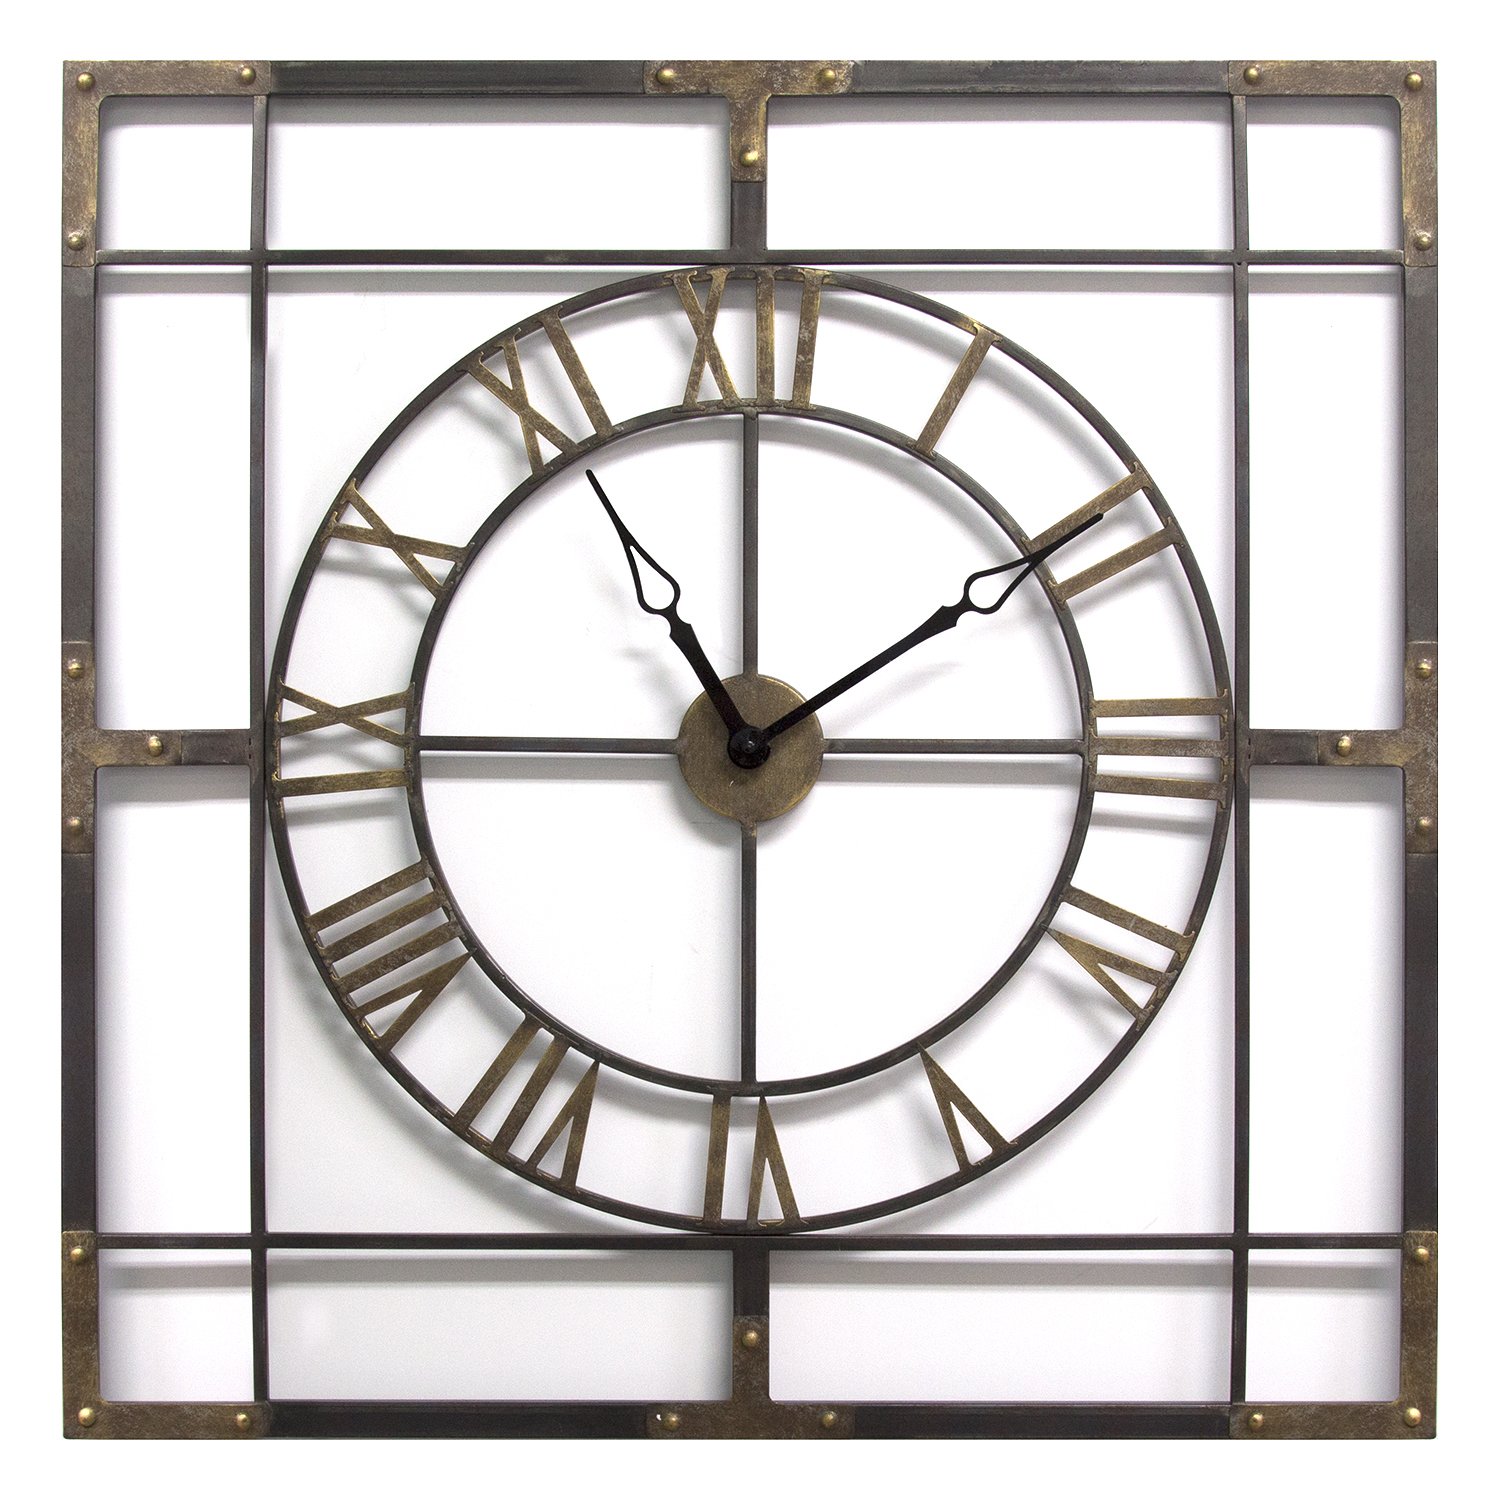 29.92" X 1.38" X 29.92" Bronze Large Industrial Wall Clock